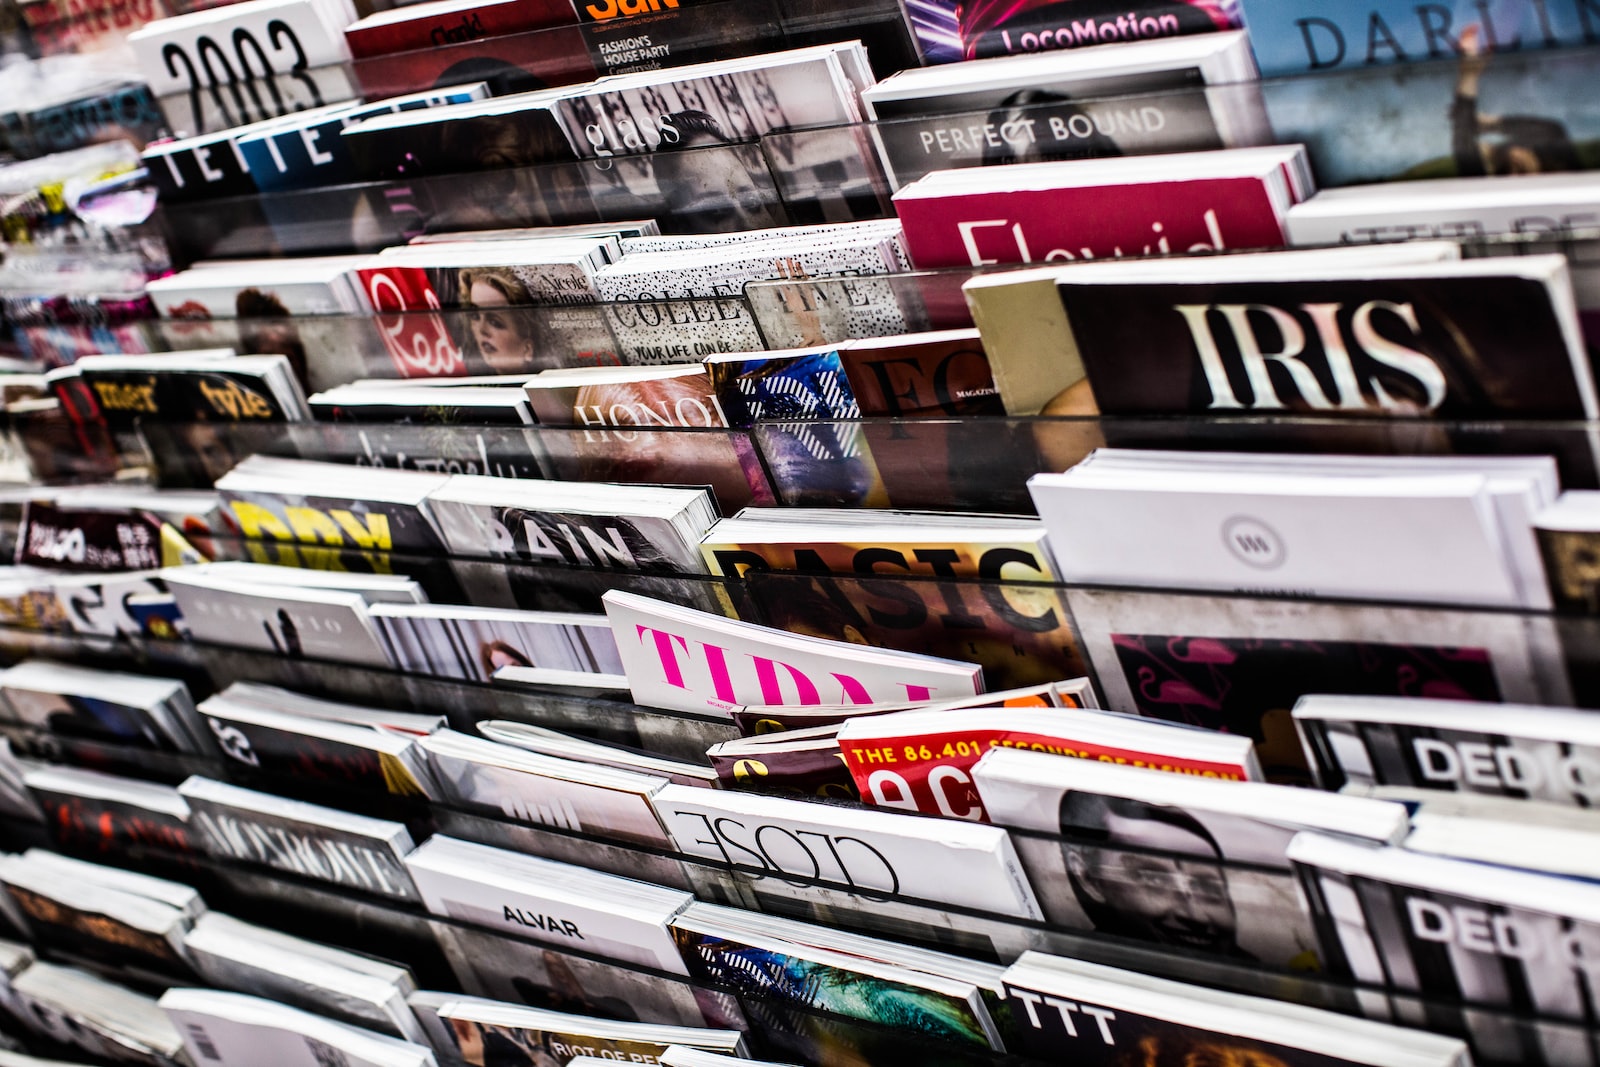 magazines on rack